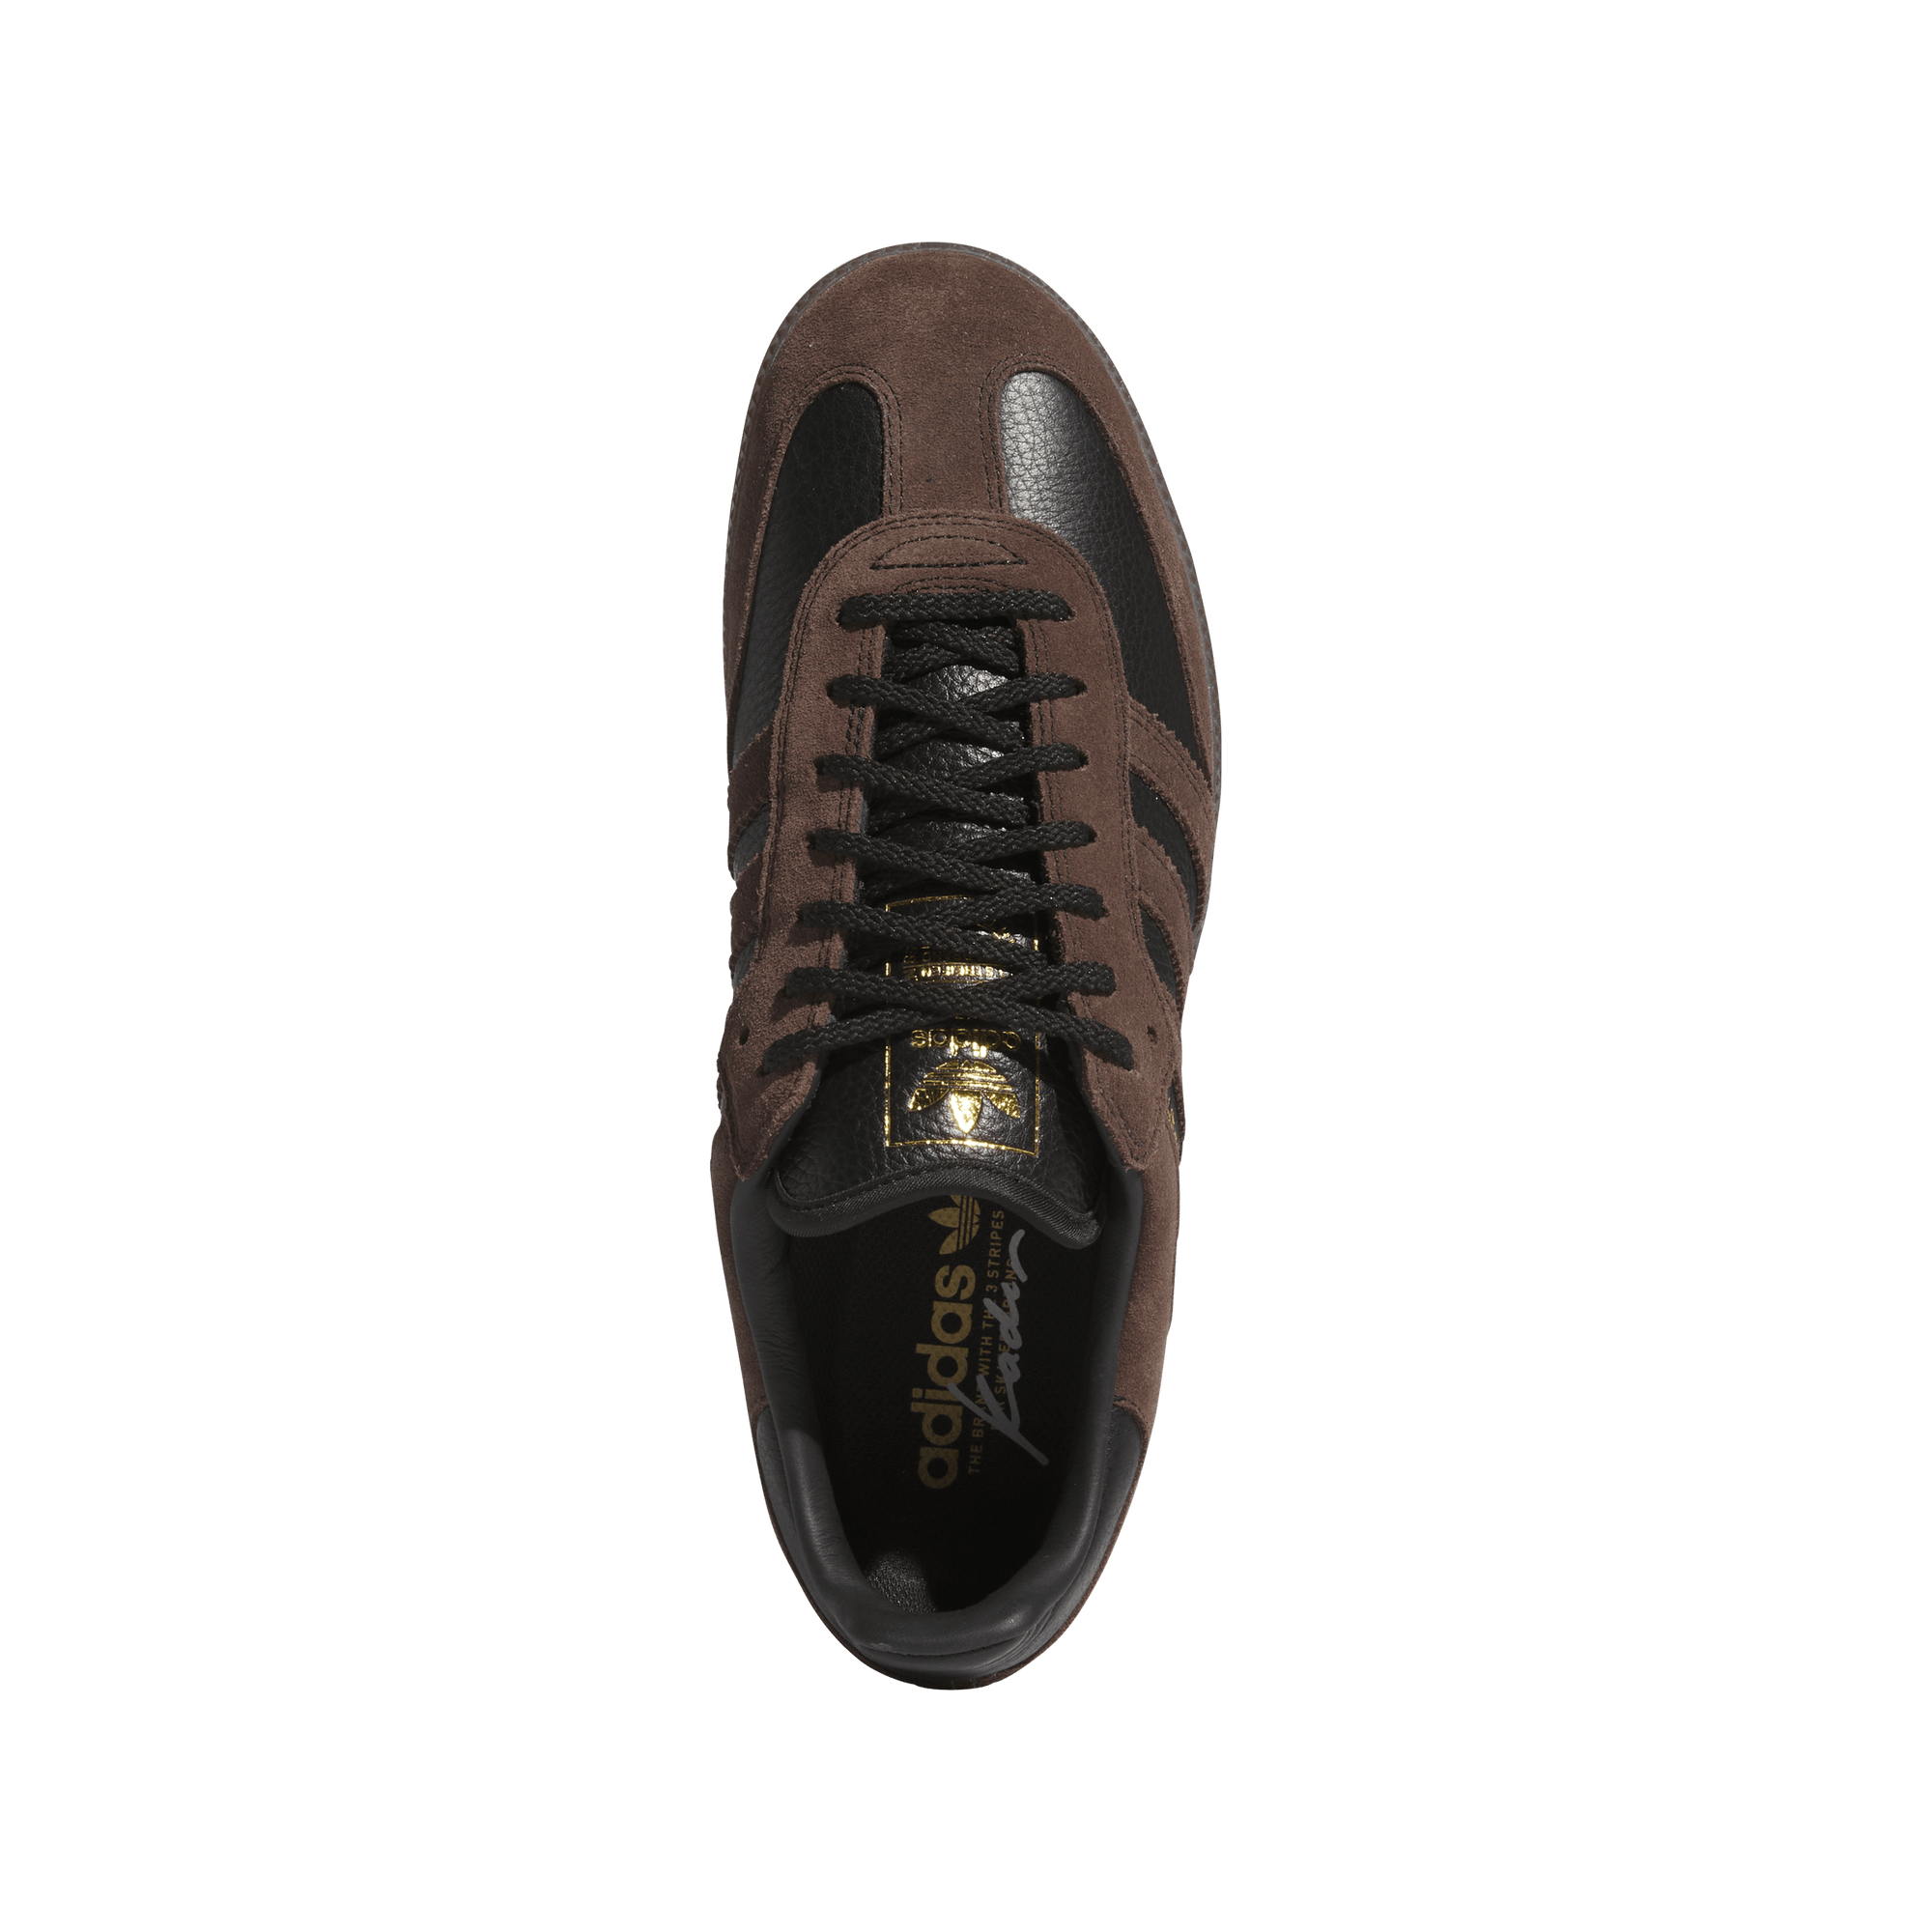 ADIDAS Samba ADV x Kader Shoes Core Black/Brown/Gum Men's Skate Shoes Adidas 